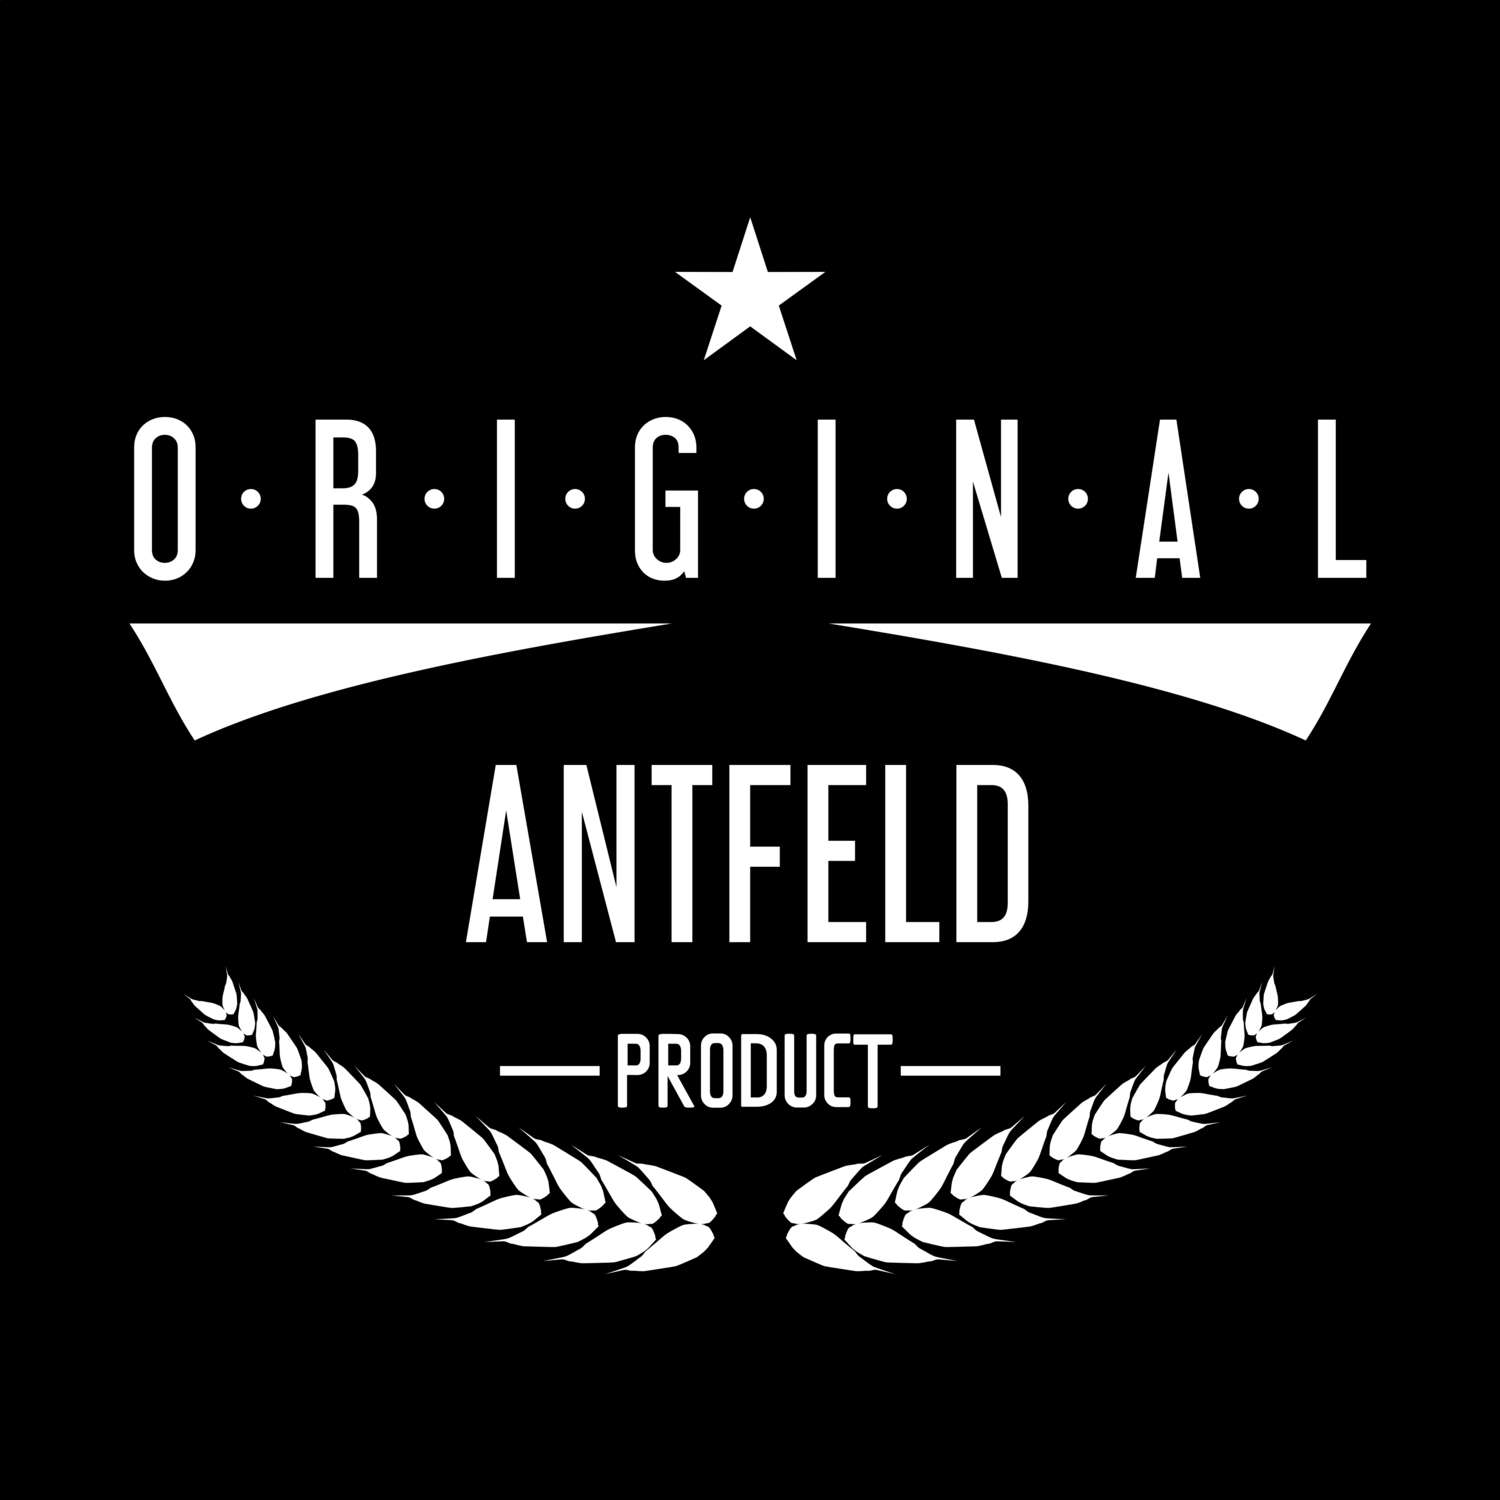 Antfeld T-Shirt »Original Product«